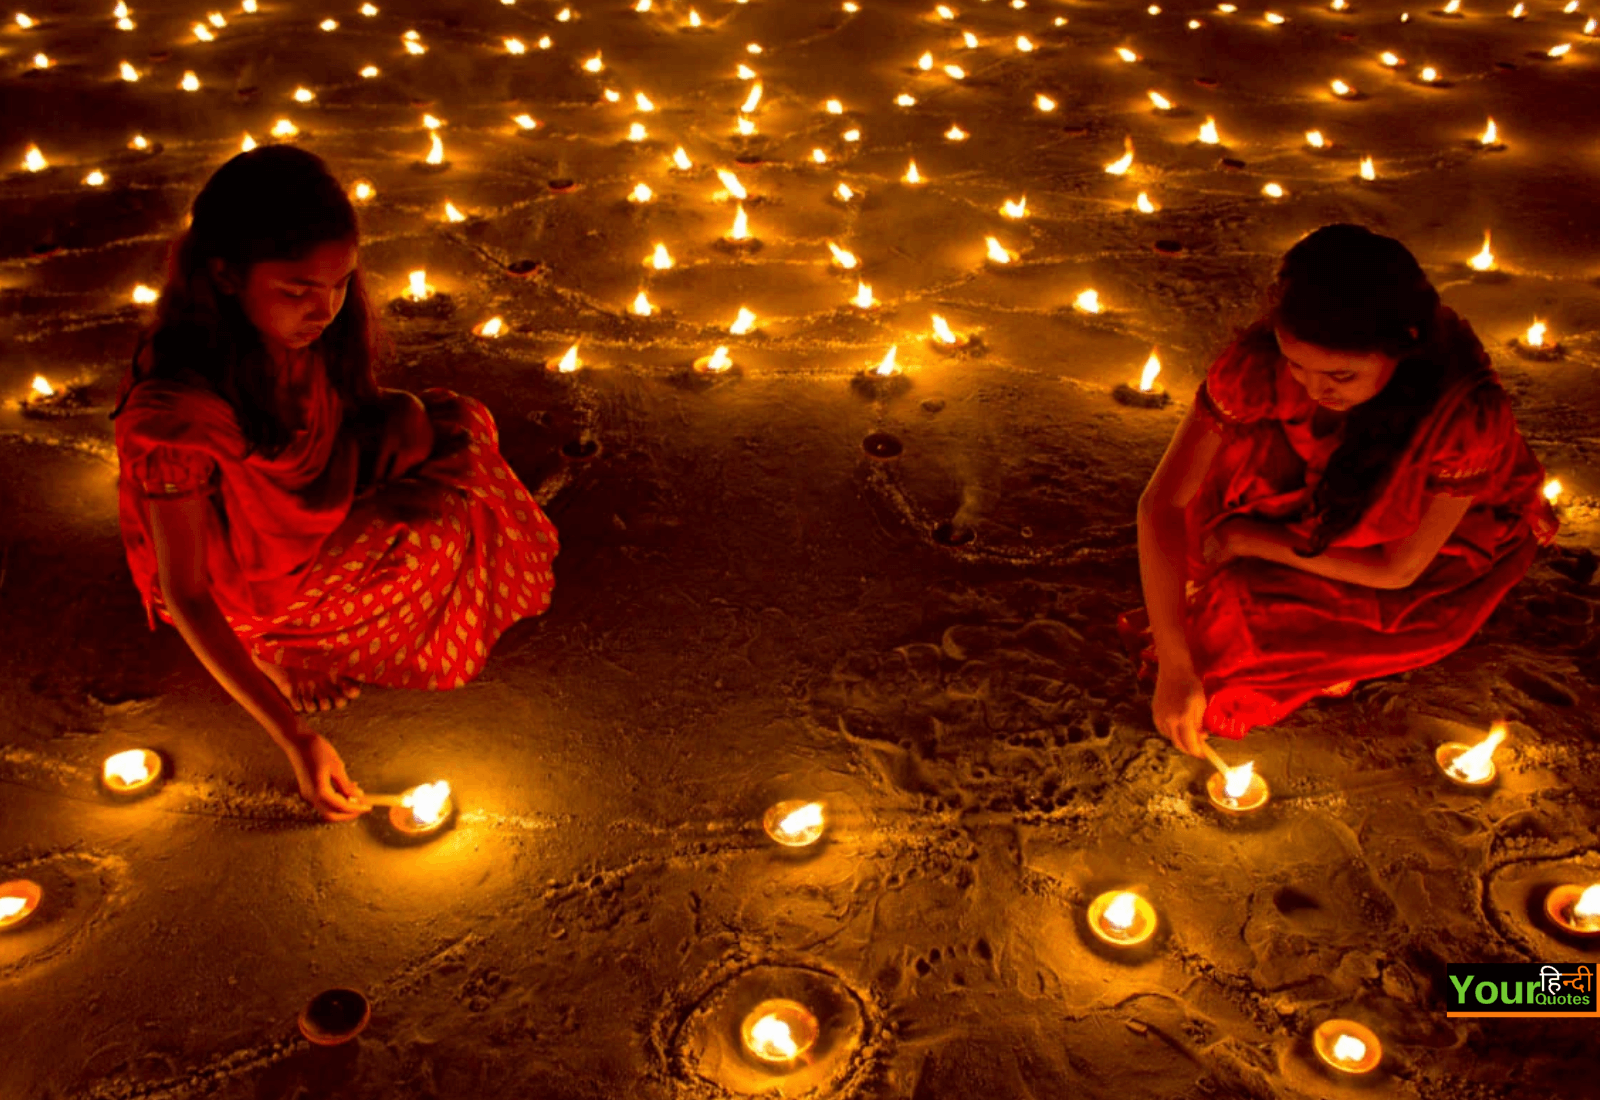 Diwali Wishes Image